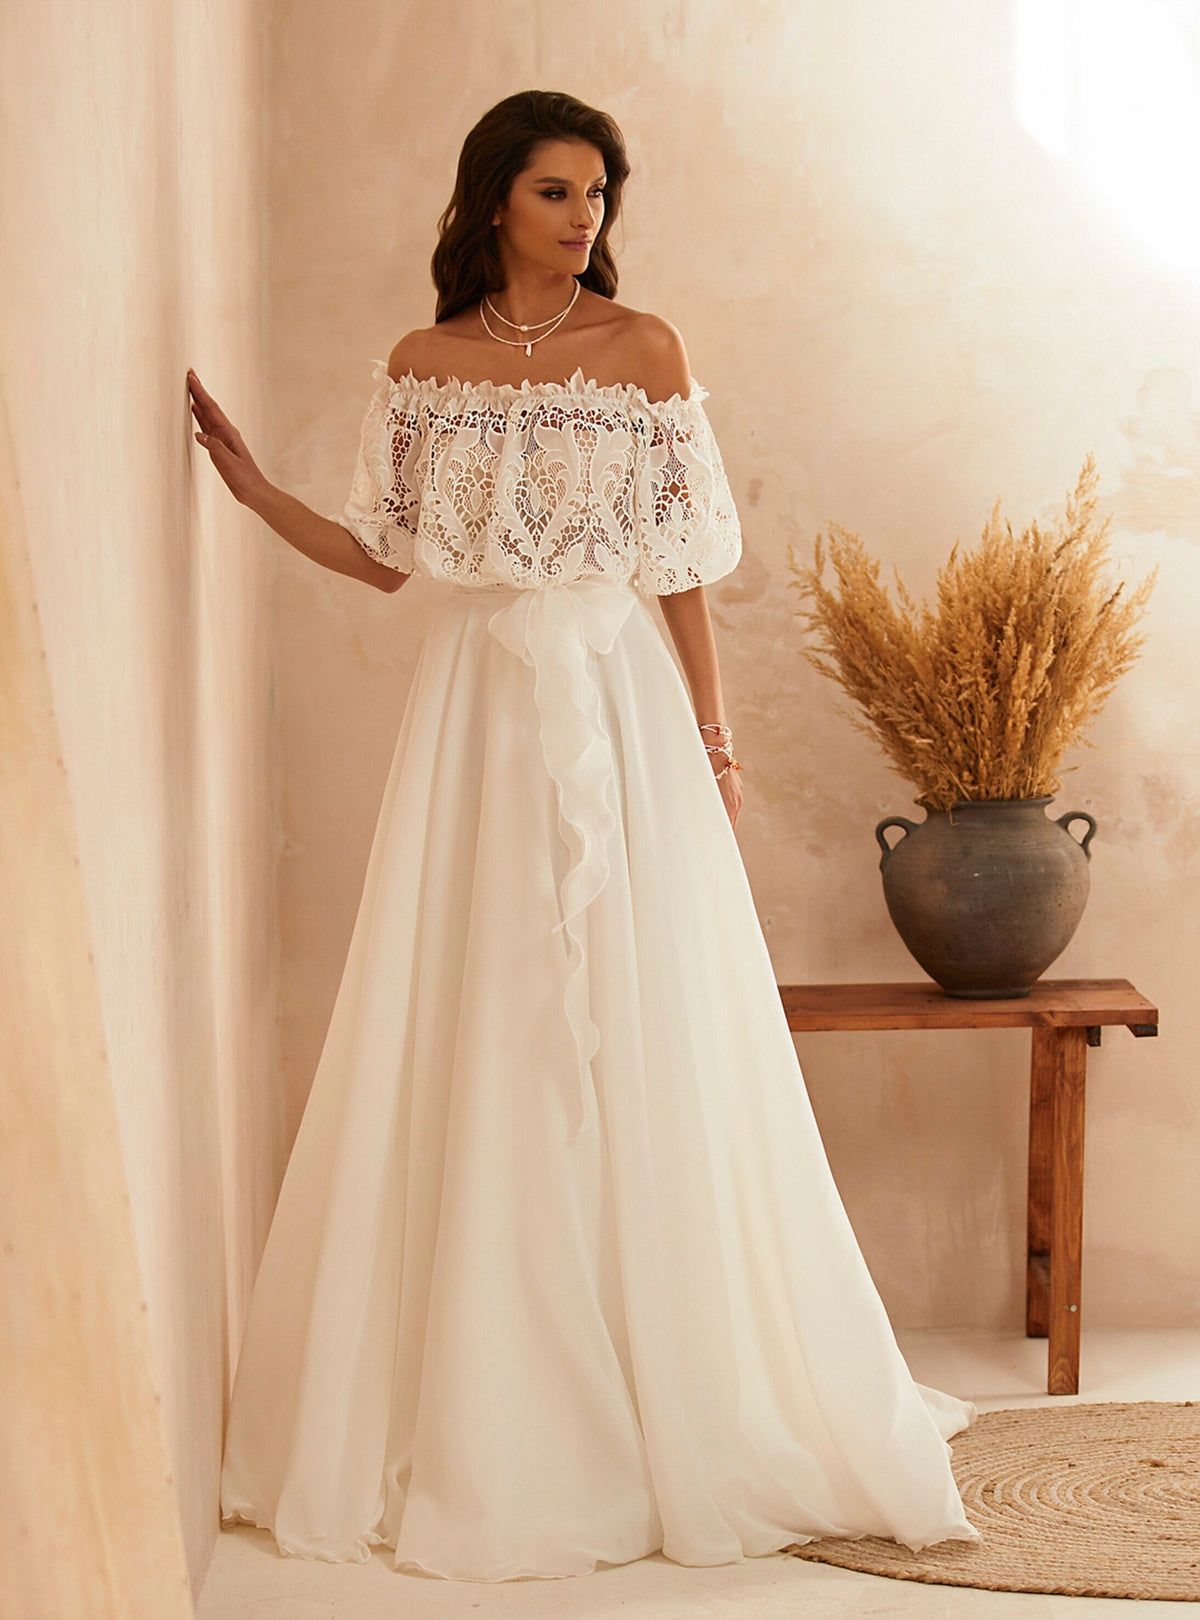 Beautiful Boho Wedding Dress Lace Bodice Off the Shoulder Bridal Gown Aline Silhouette Chiffon Skirt Summer Wedding Design Short Sleeves